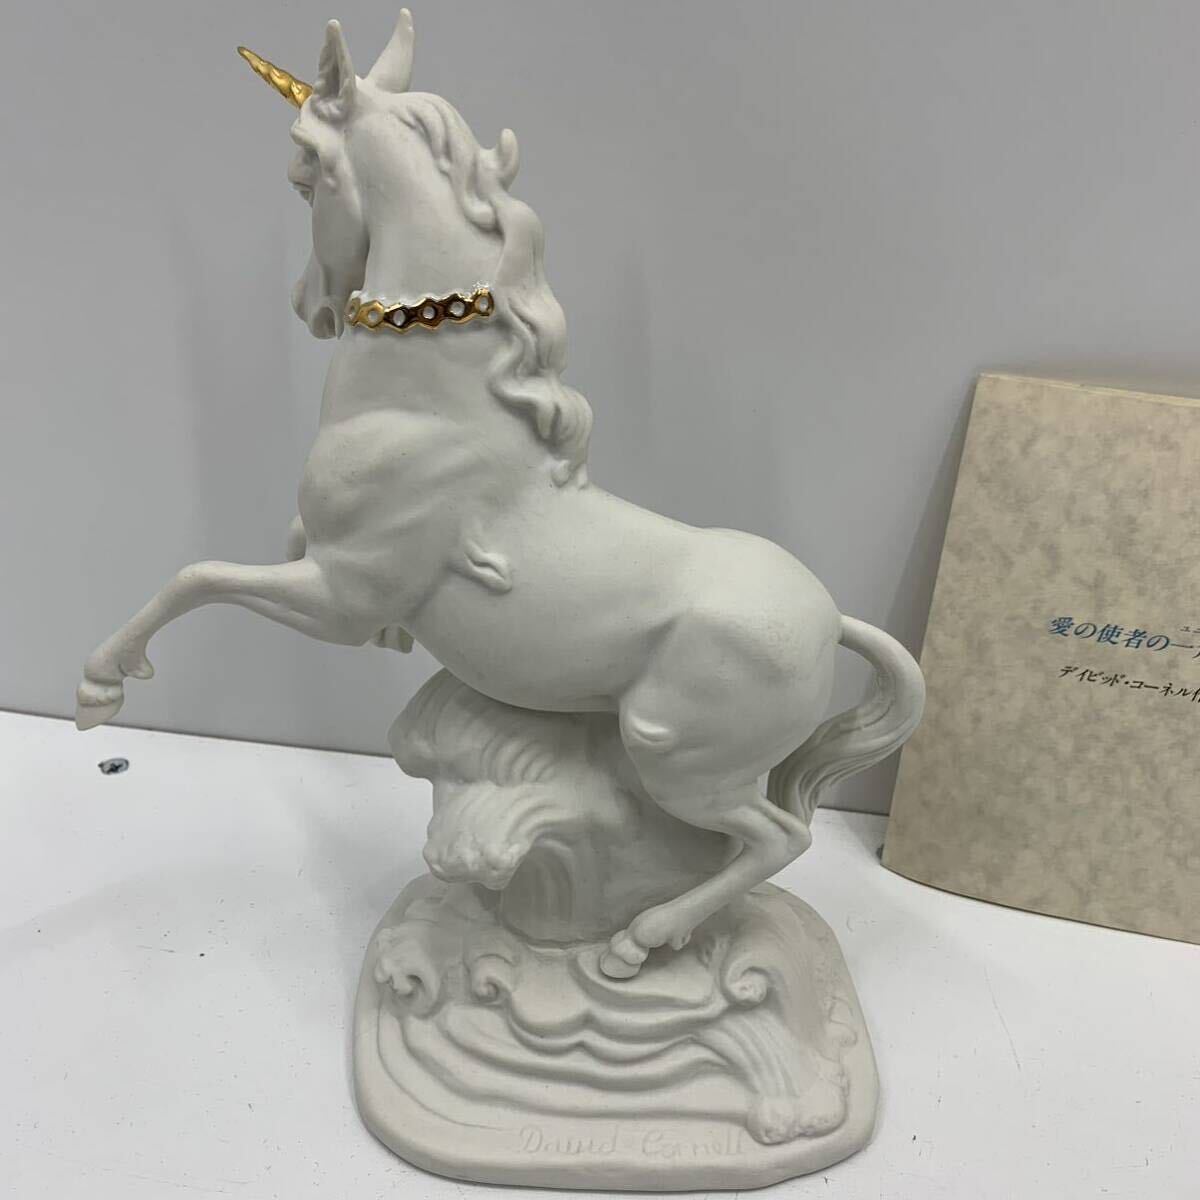 I☆まとめ☆置物 陶器 陶器人形 インテリア オブジェ ユニコーン デイビッドコーネル作 unicorn ヴィンテージ 白磁 美術品 イギリス製 馬の画像4